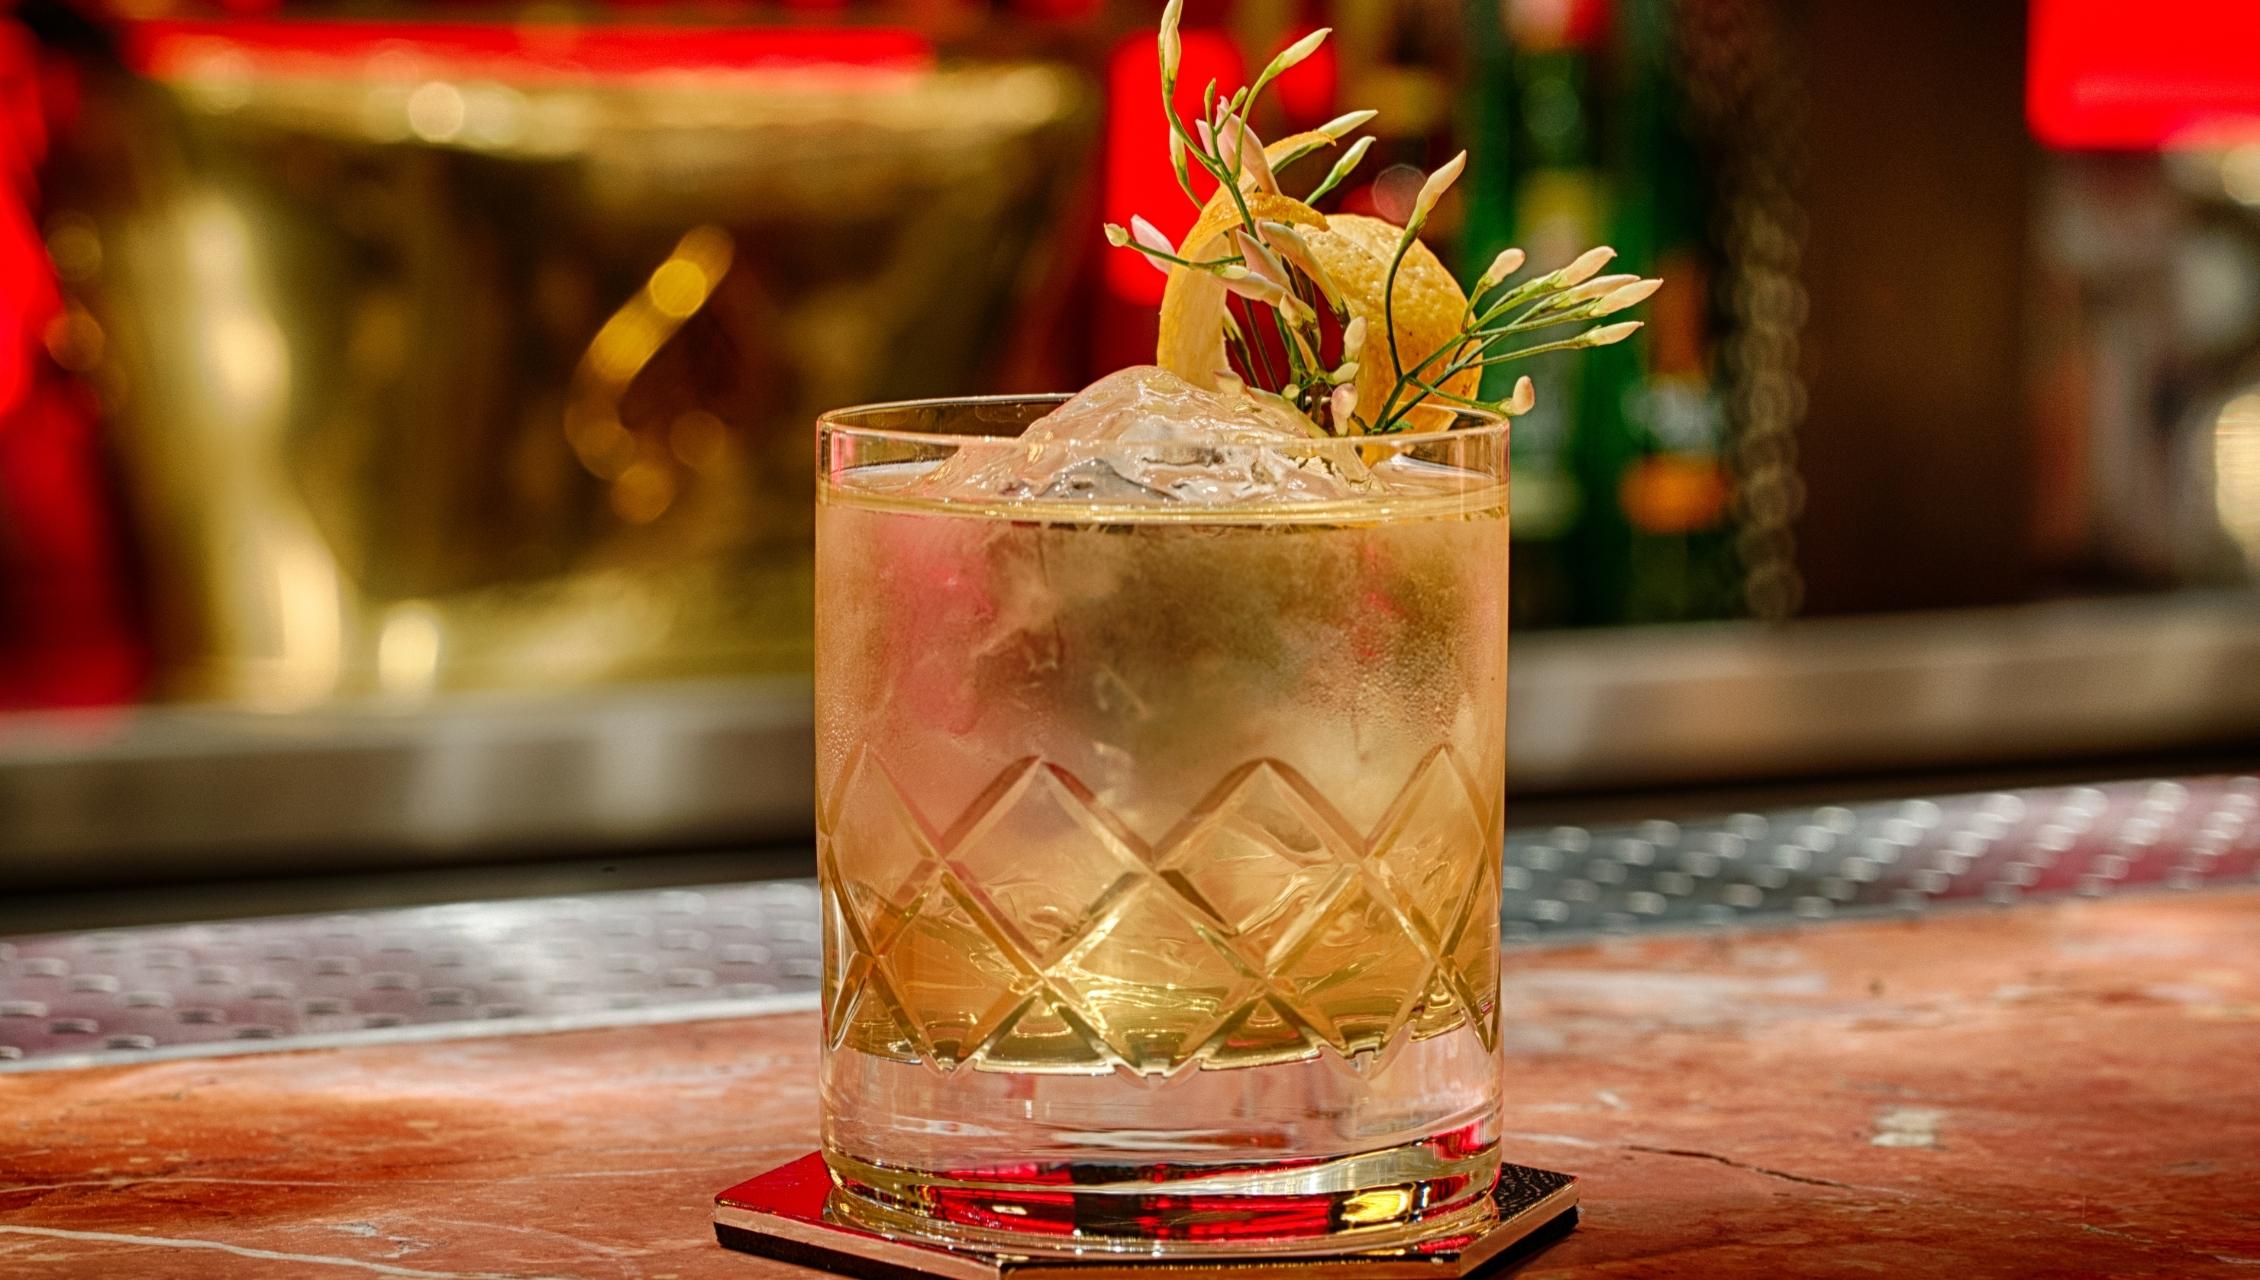 Vieux-Carre-Cocktail-Recipe The Bottle Club